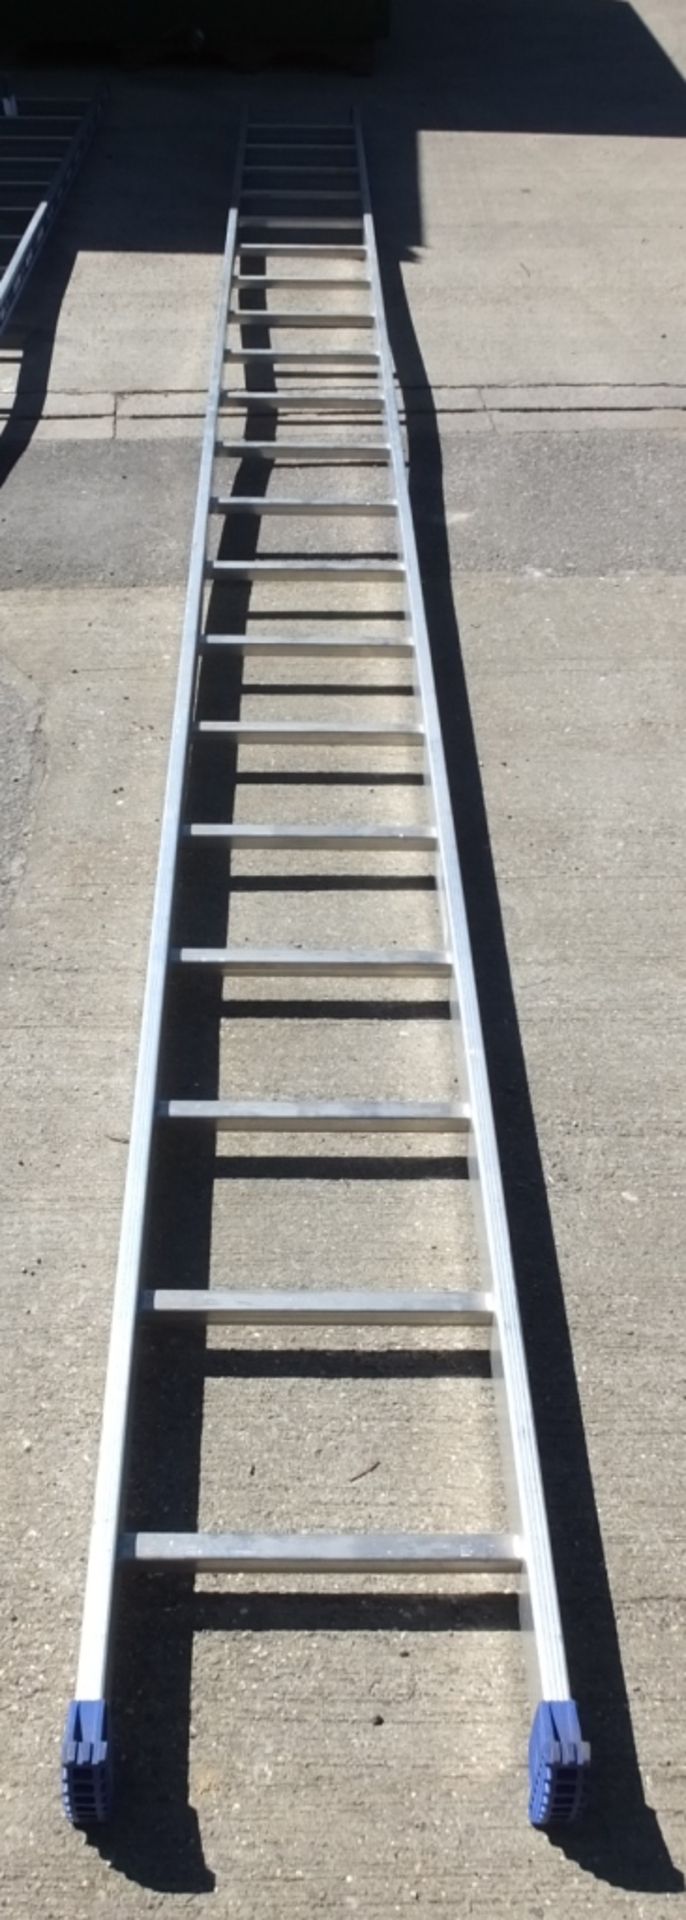 Tubesca Platinum ladder - 20 rung